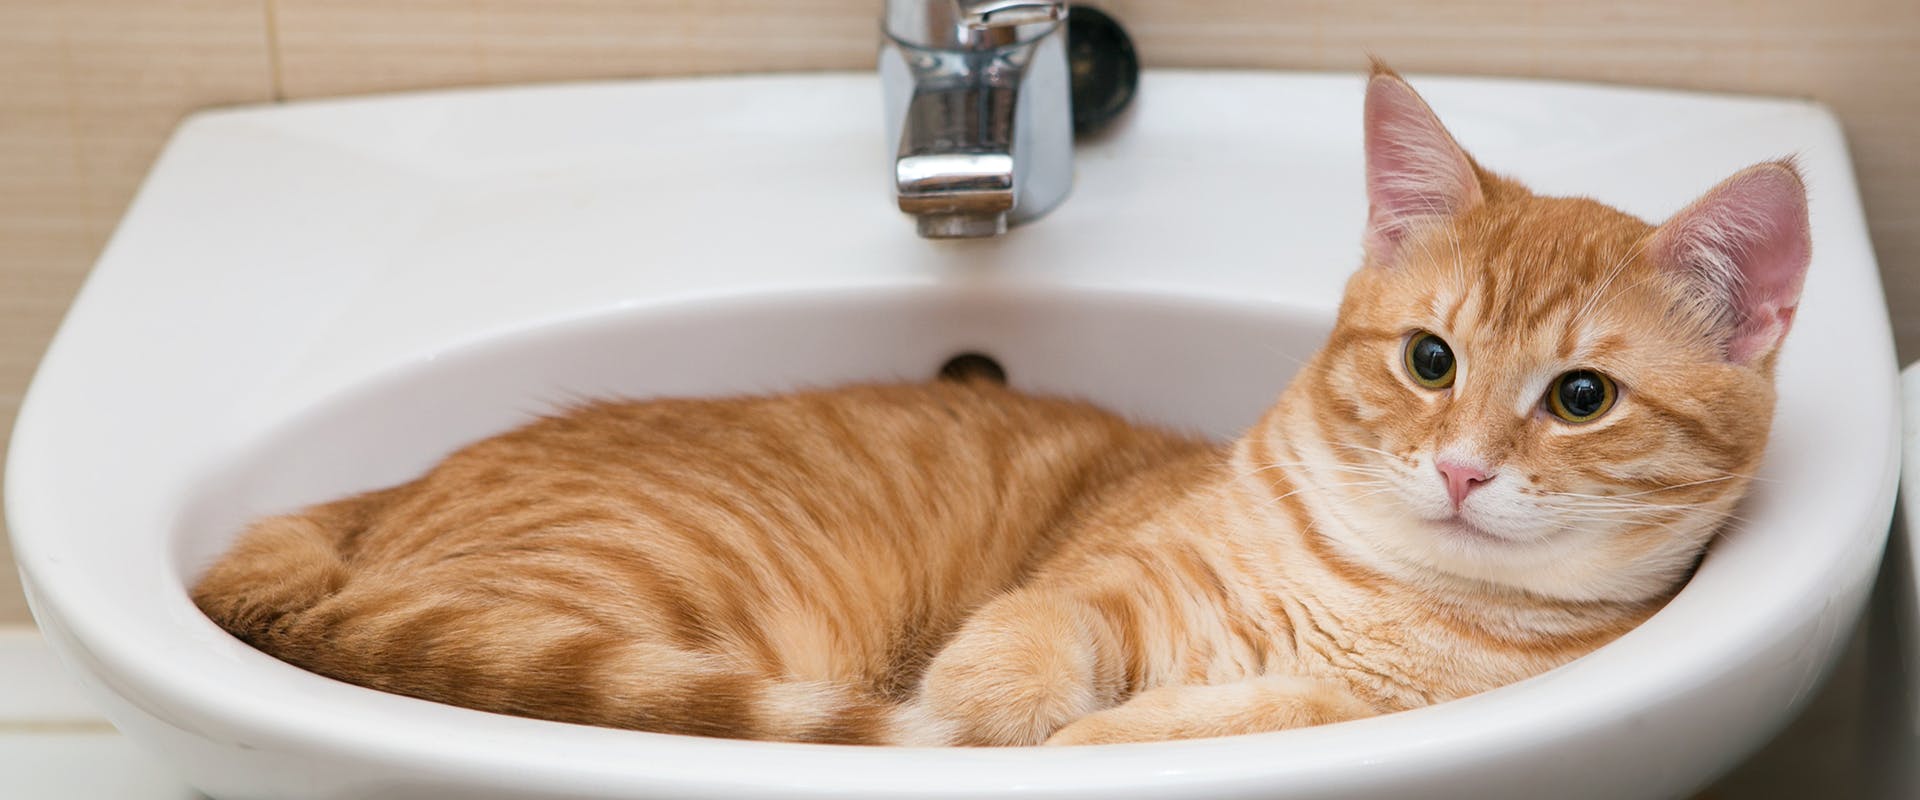 A cat relaxing in a bathroom sink